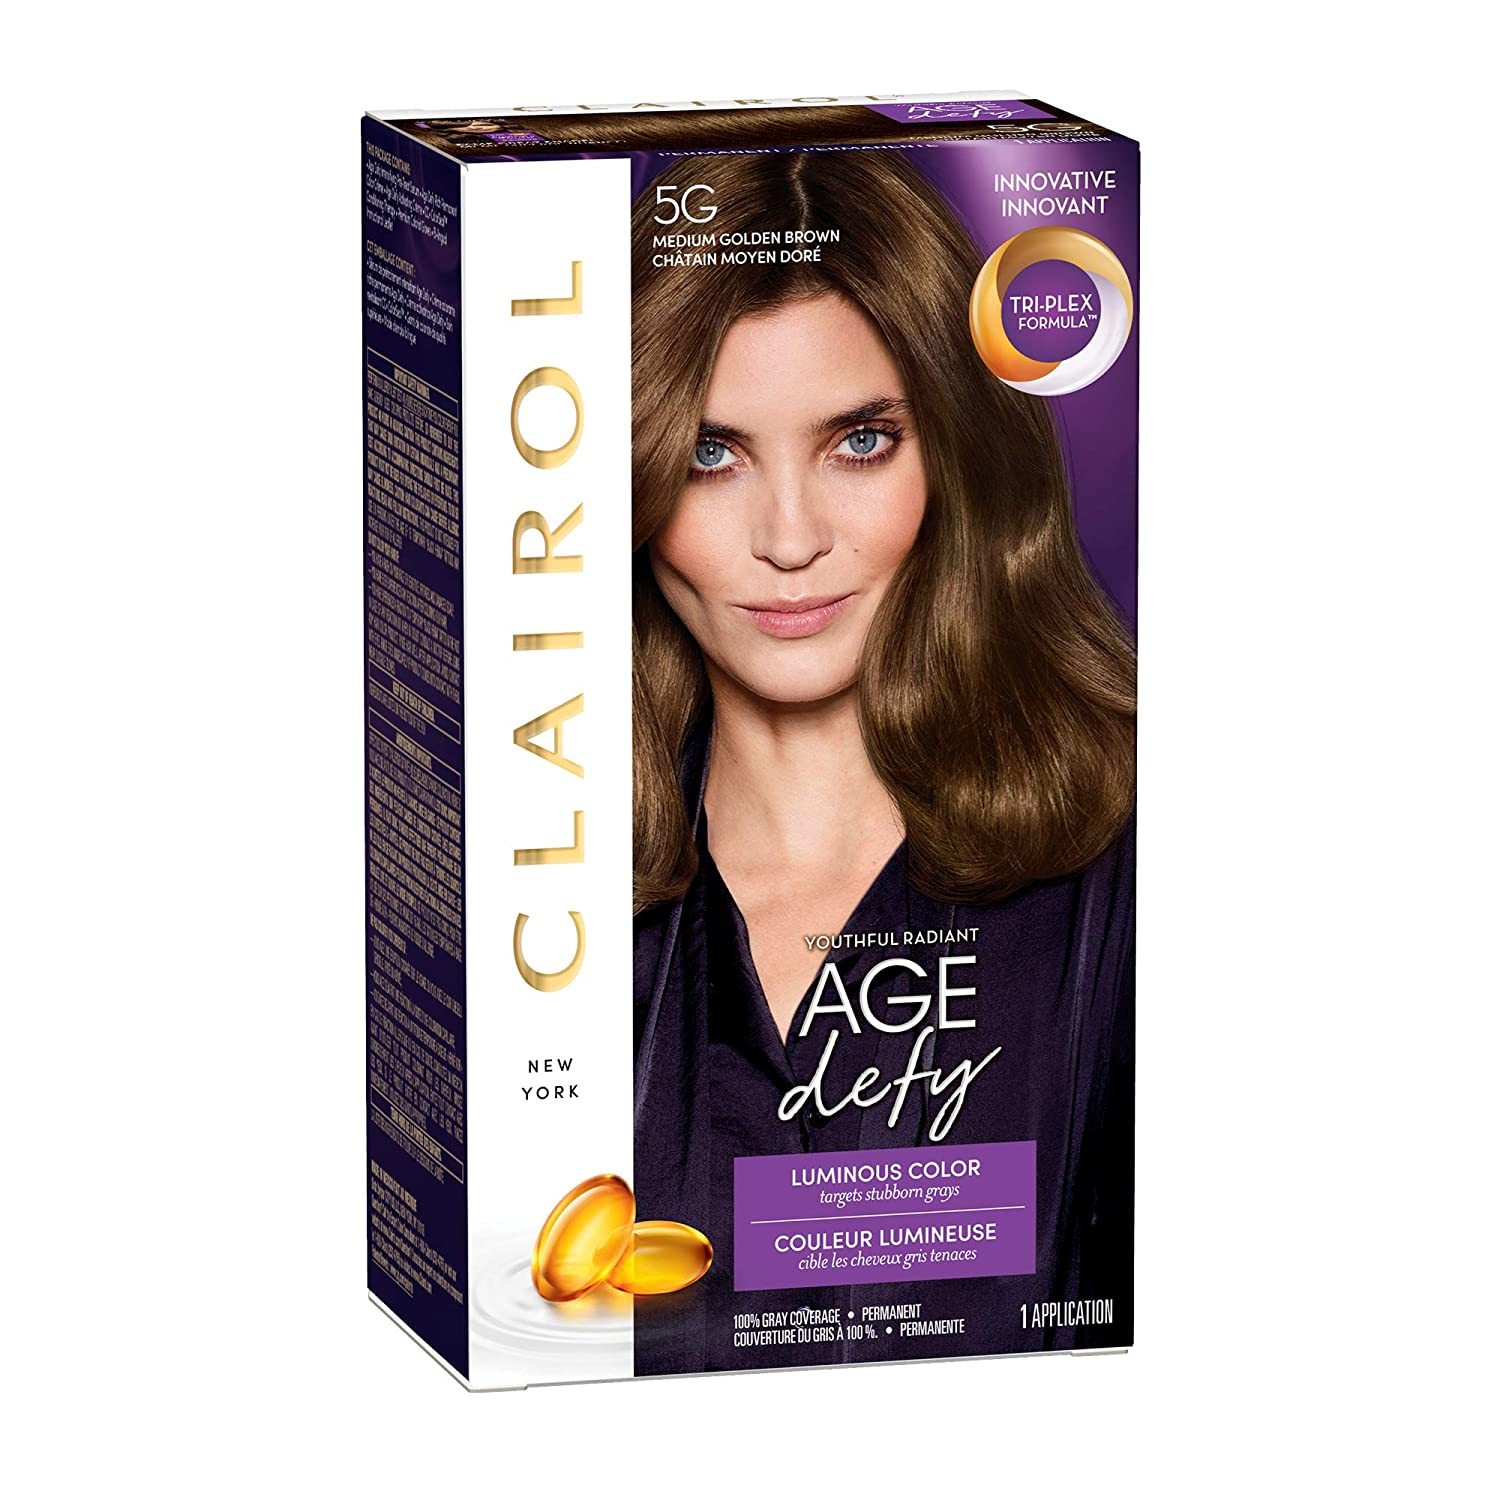 New Clairol Age Defy Permanent Hair Dye, 5G Medium Golden Brown Hair Color